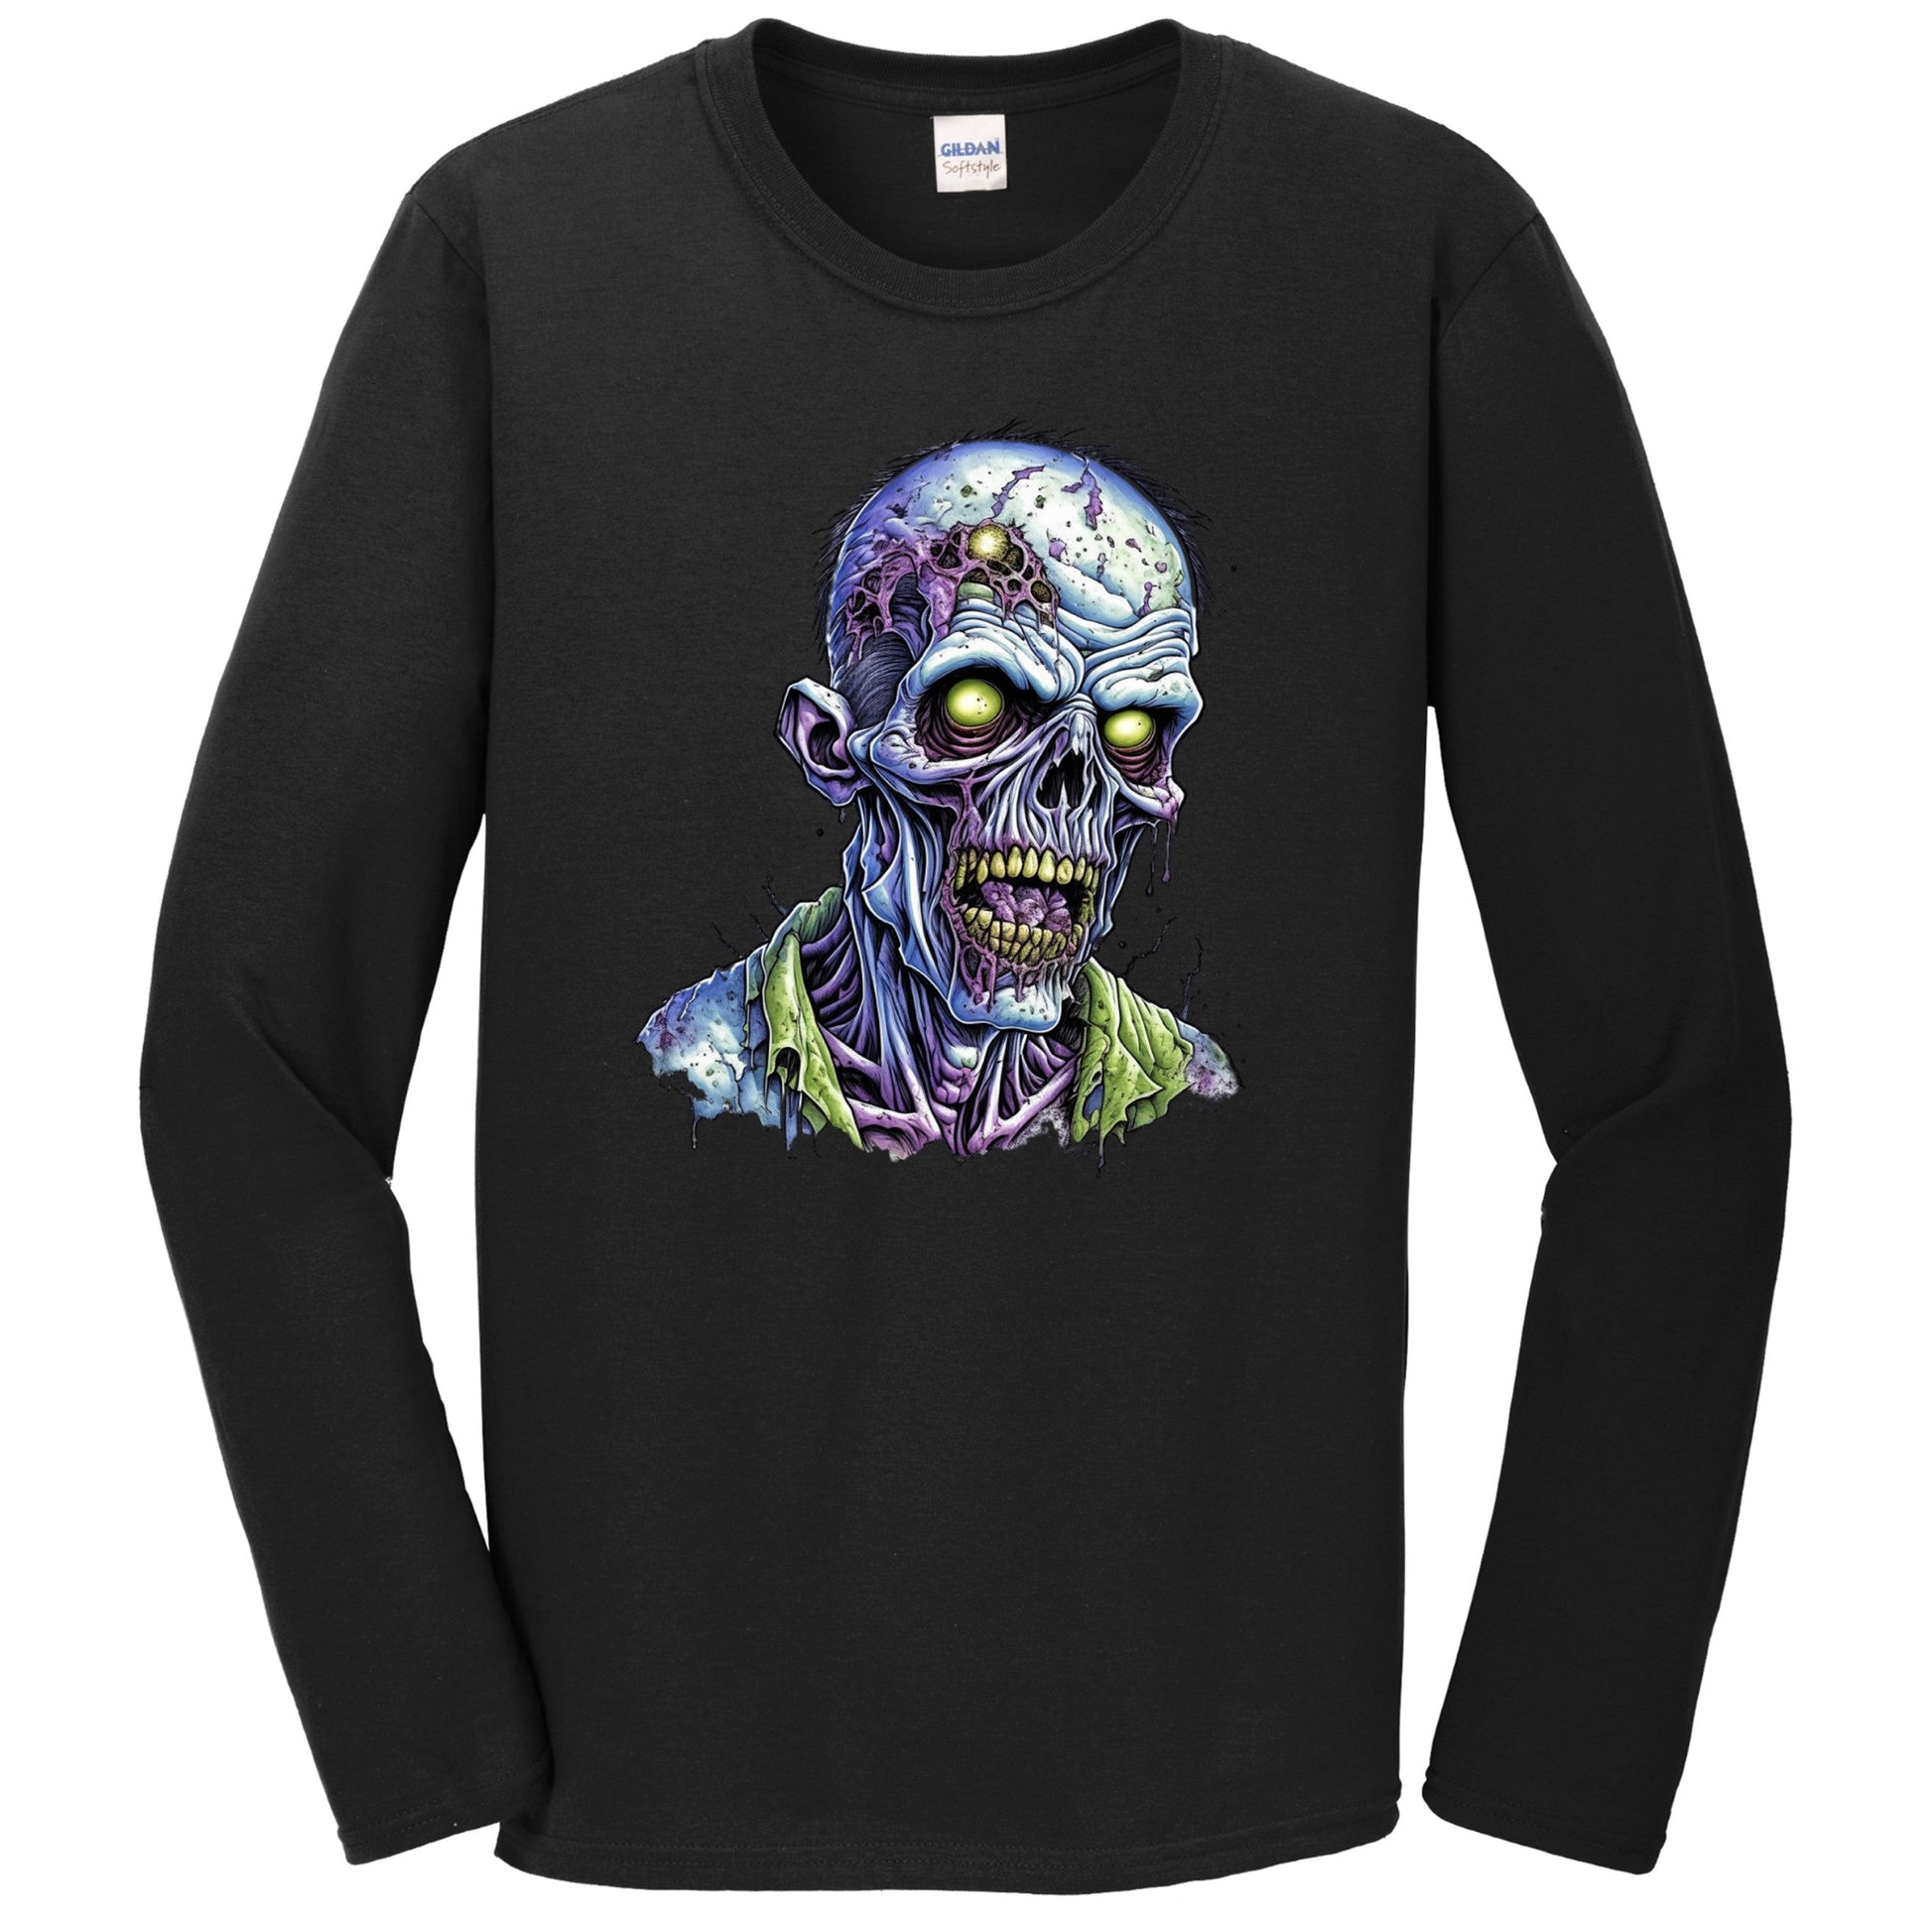 Creepy Zombie Scary Monster Halloween Long Sleeve T-Shirt